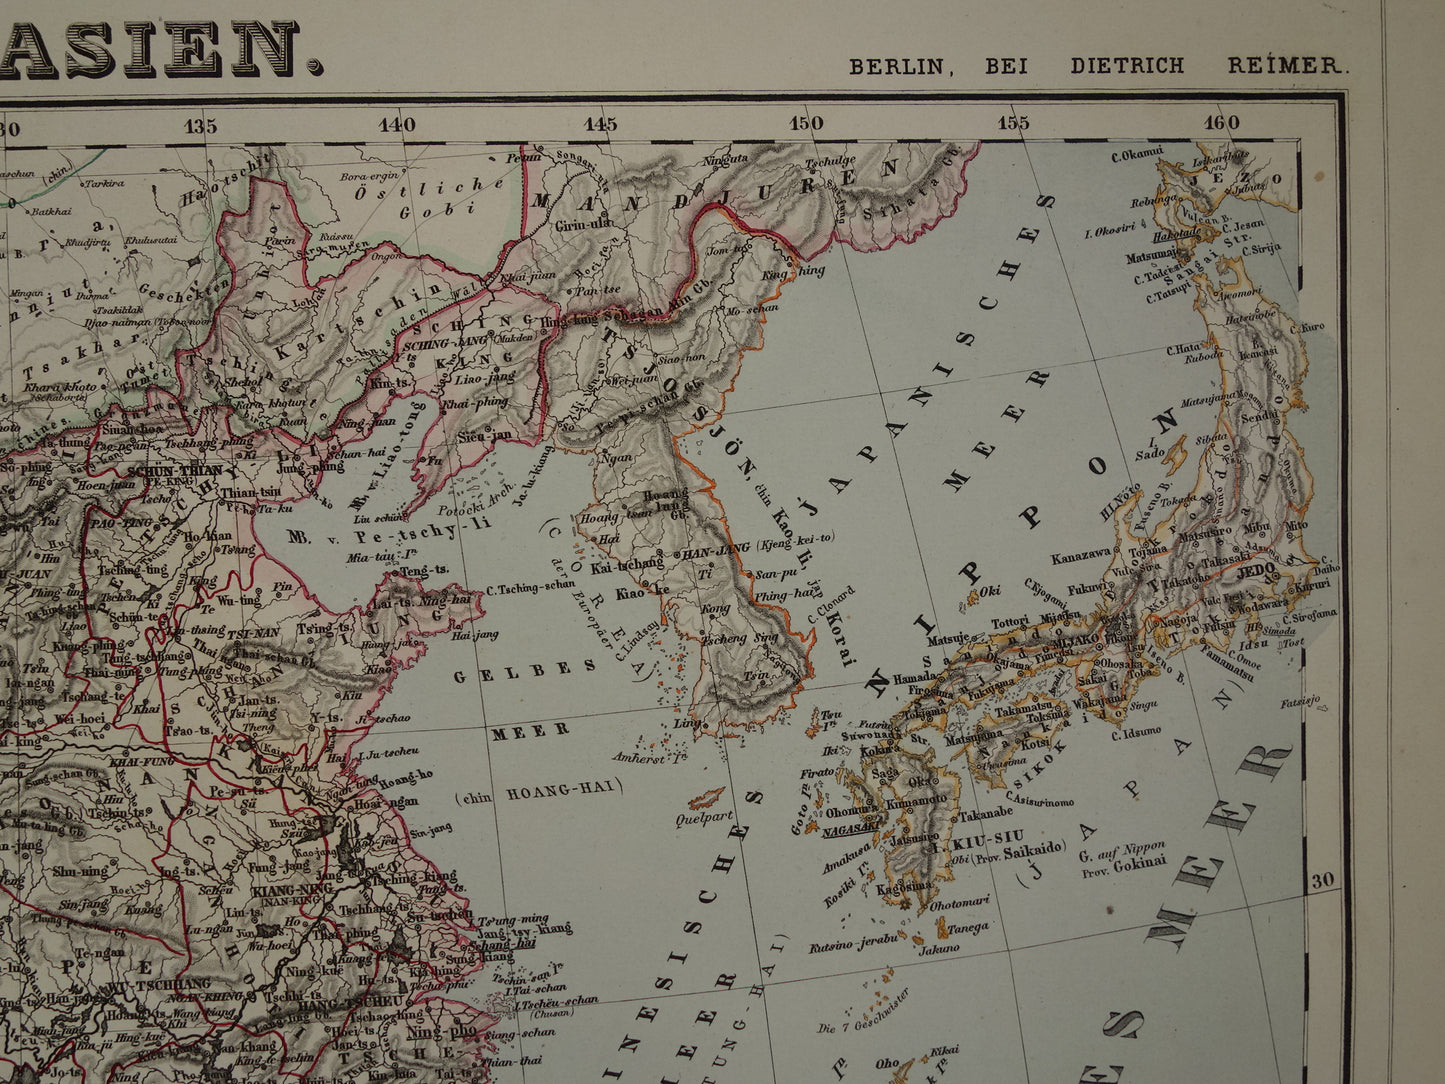 INDONESIË Grote oude kaart van oost Azië in 1856 originele antieke landkaart China Filipijnen Thailand Vietnam vintage poster